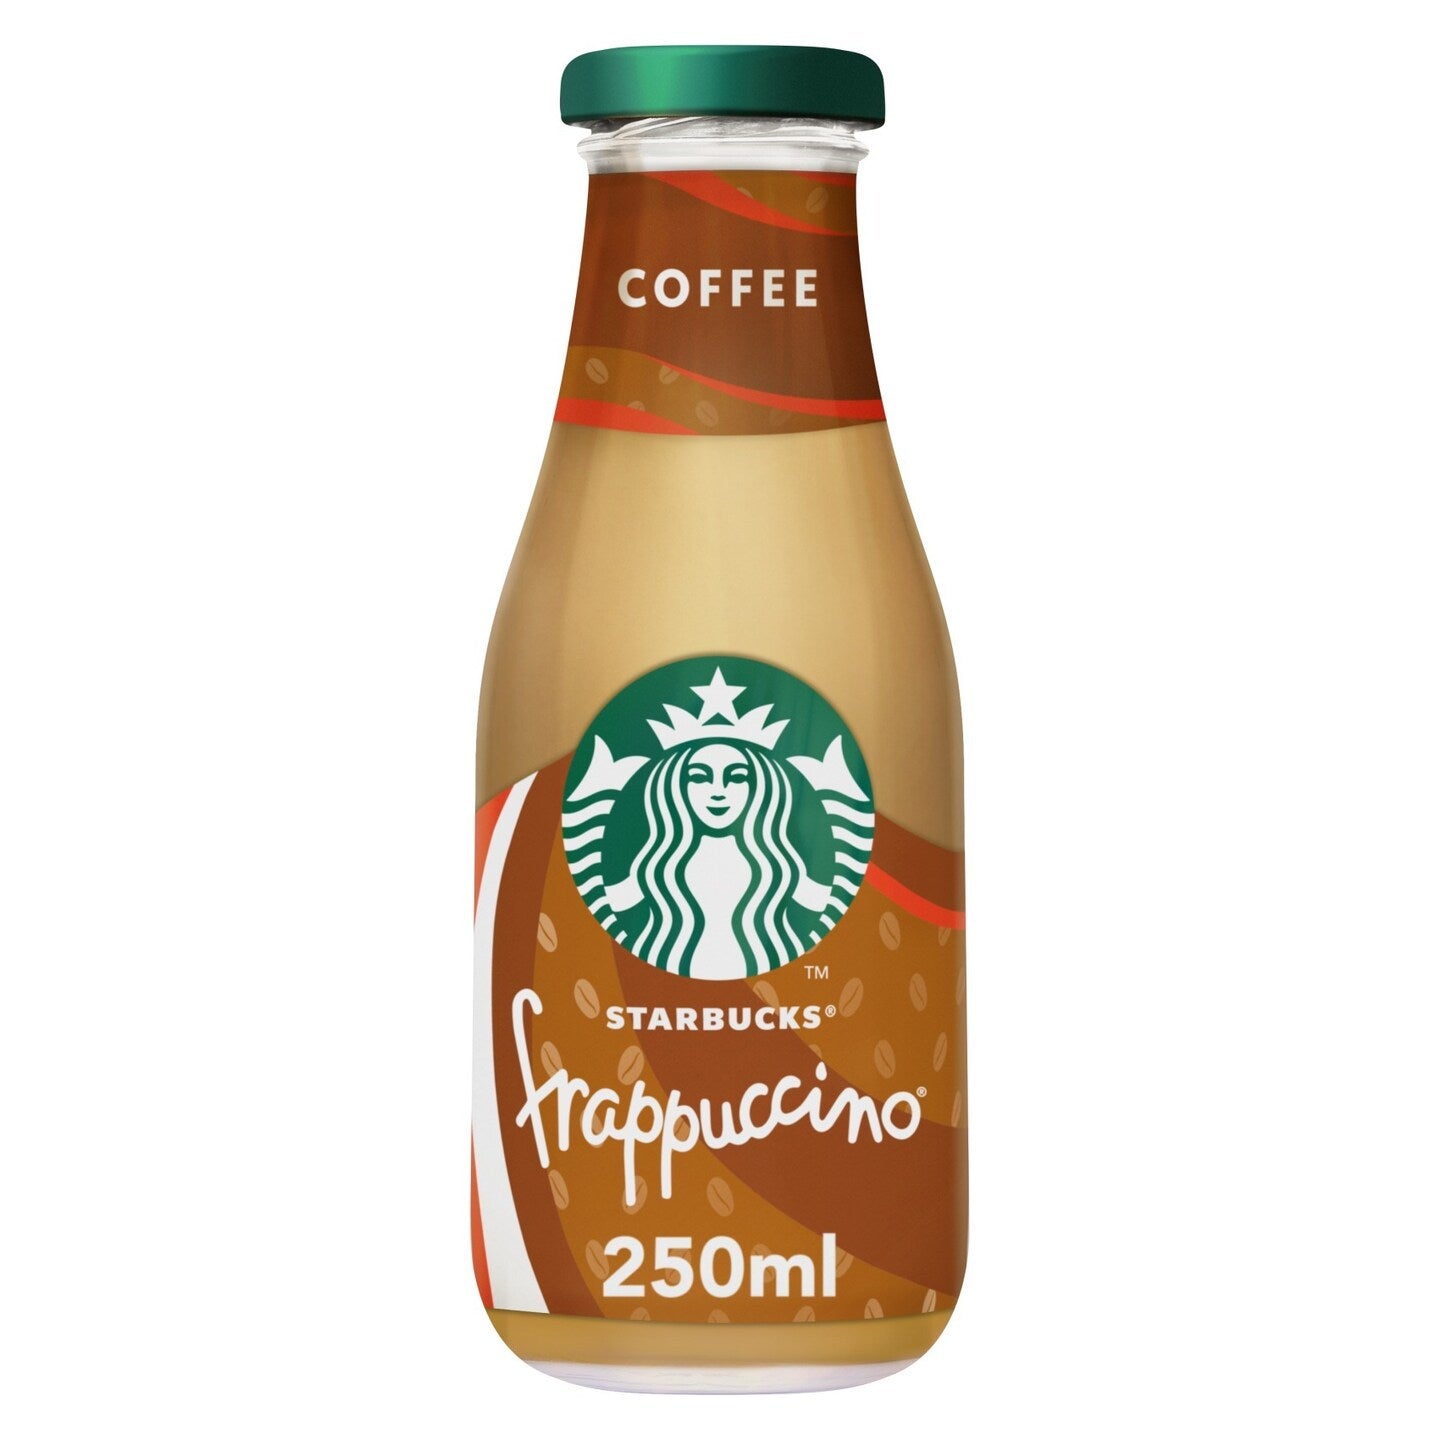 Starbucks Frappuccino - Sweet Creamy Coffee - Coffee Drink Bottle 250ml

- Best Before 12-12-22